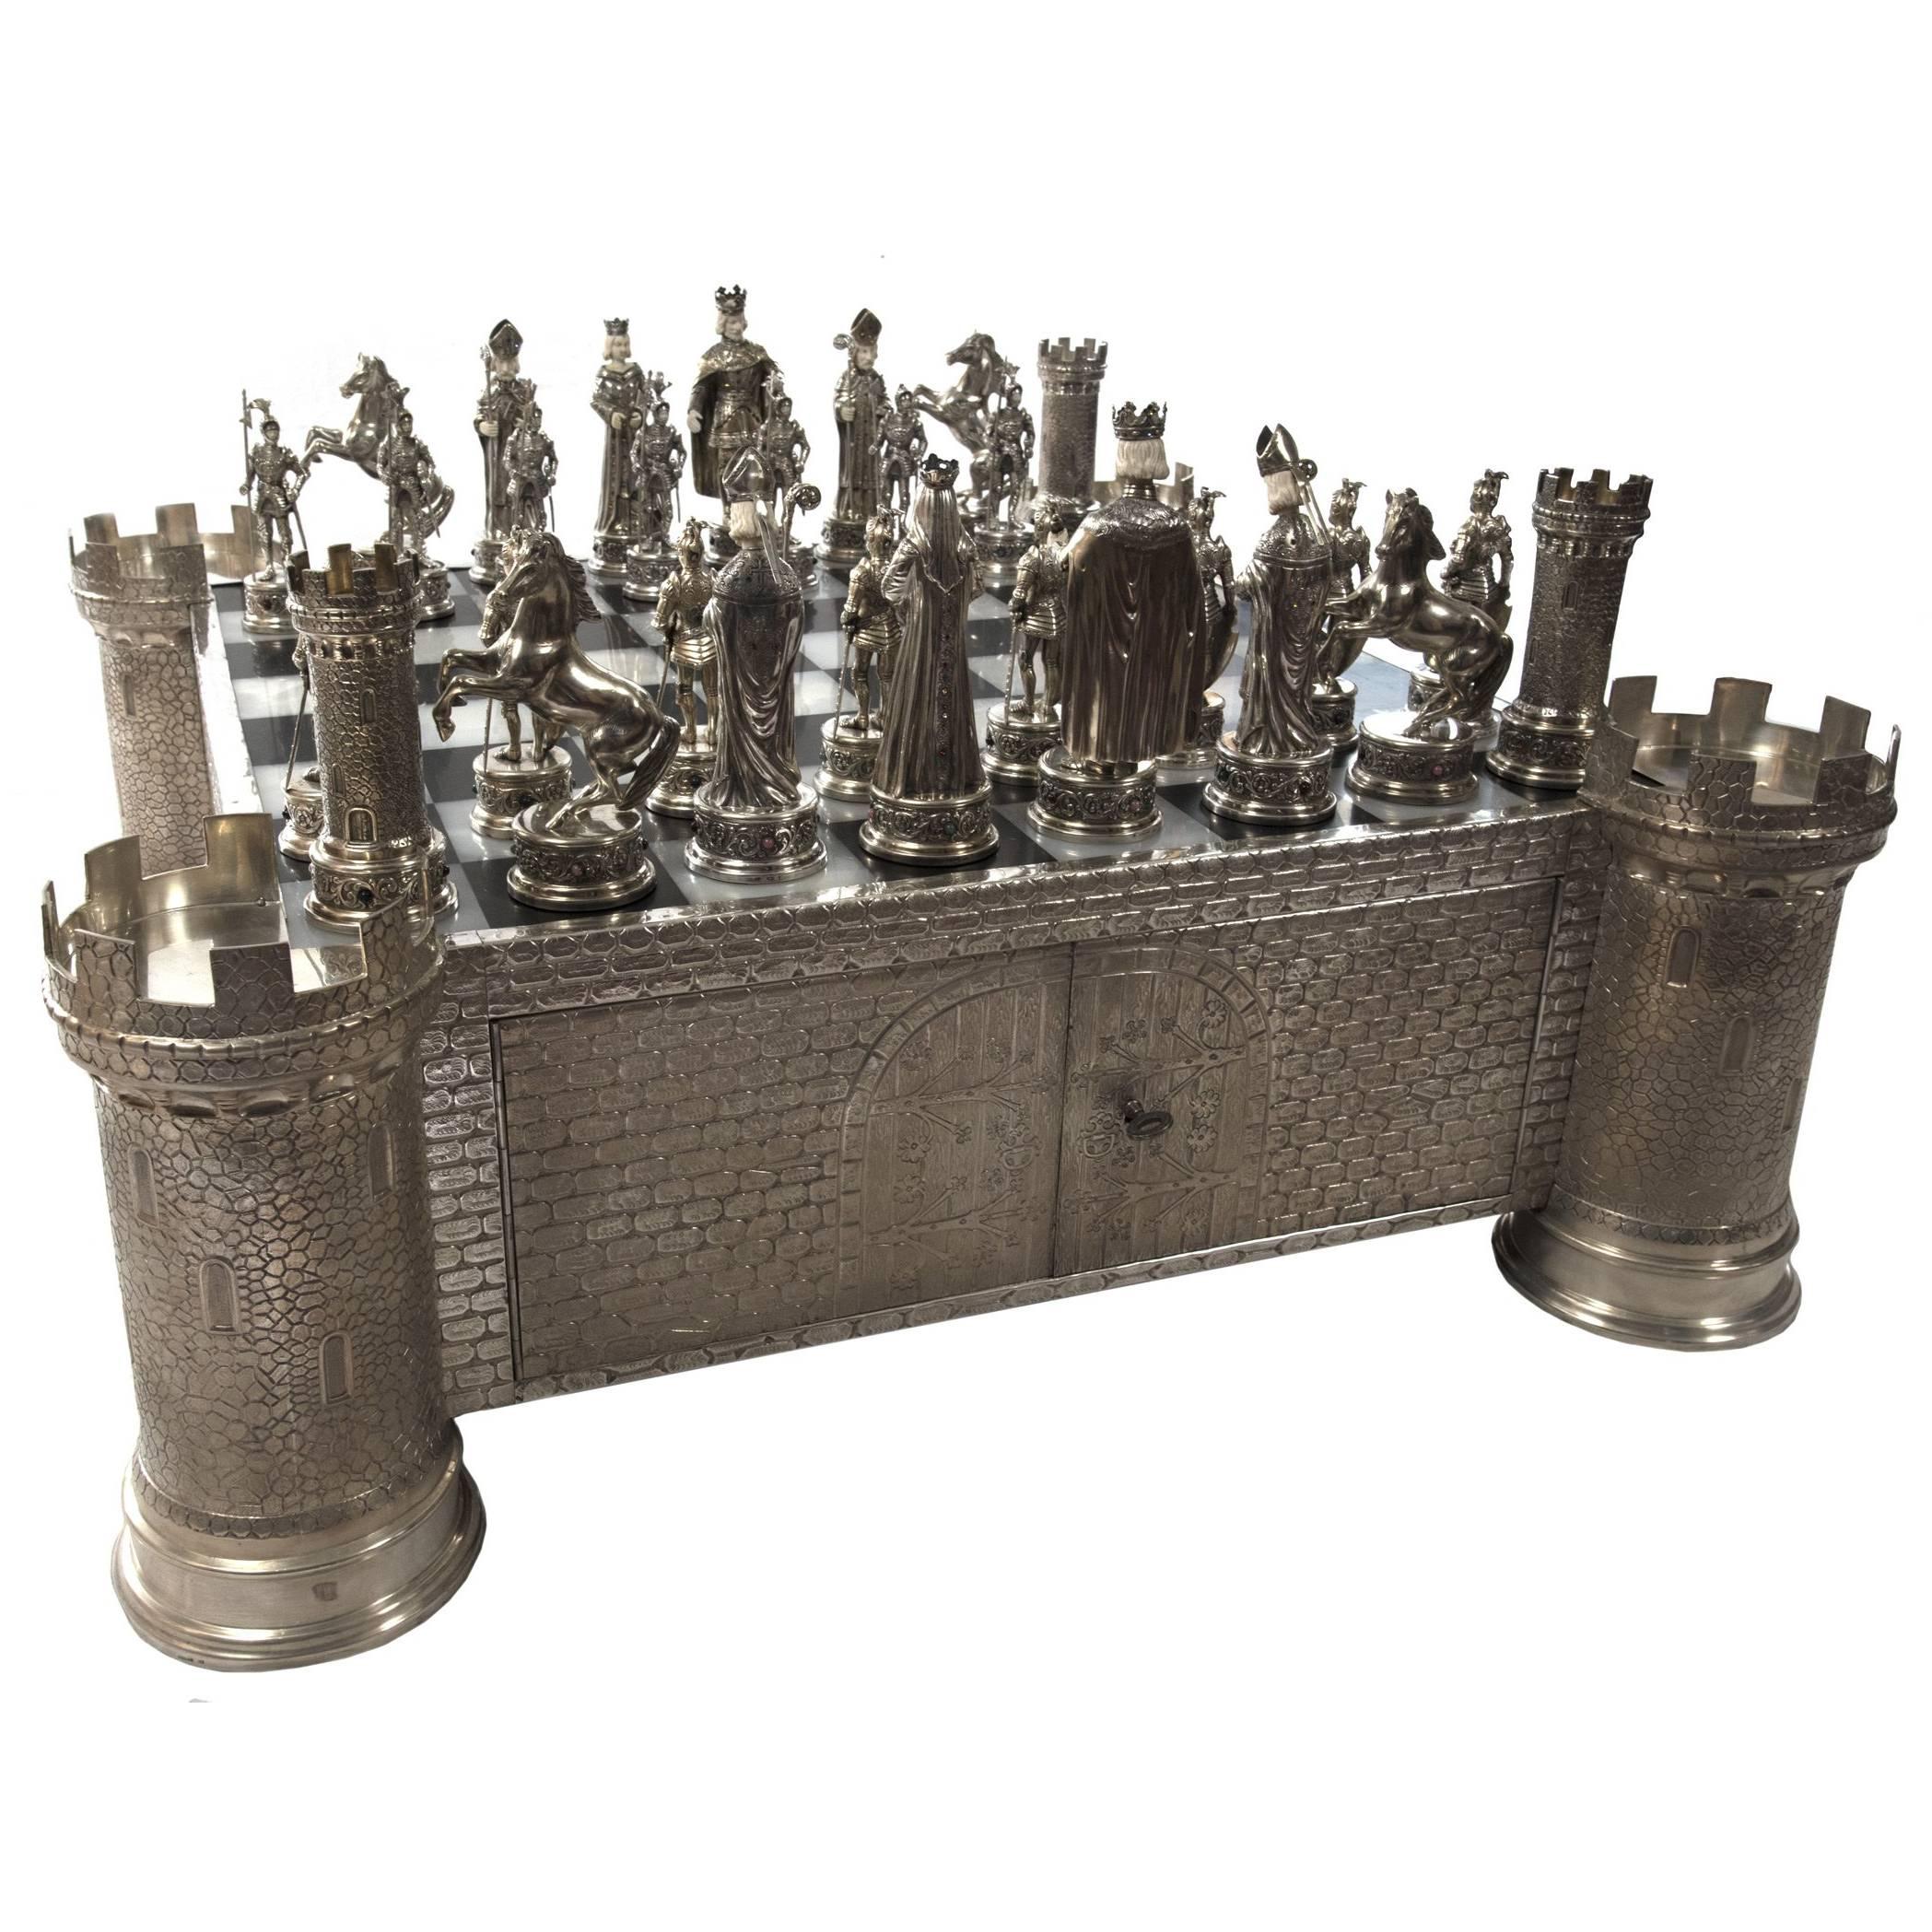 German Jewel Encrusted Silver and Bone Chess Set